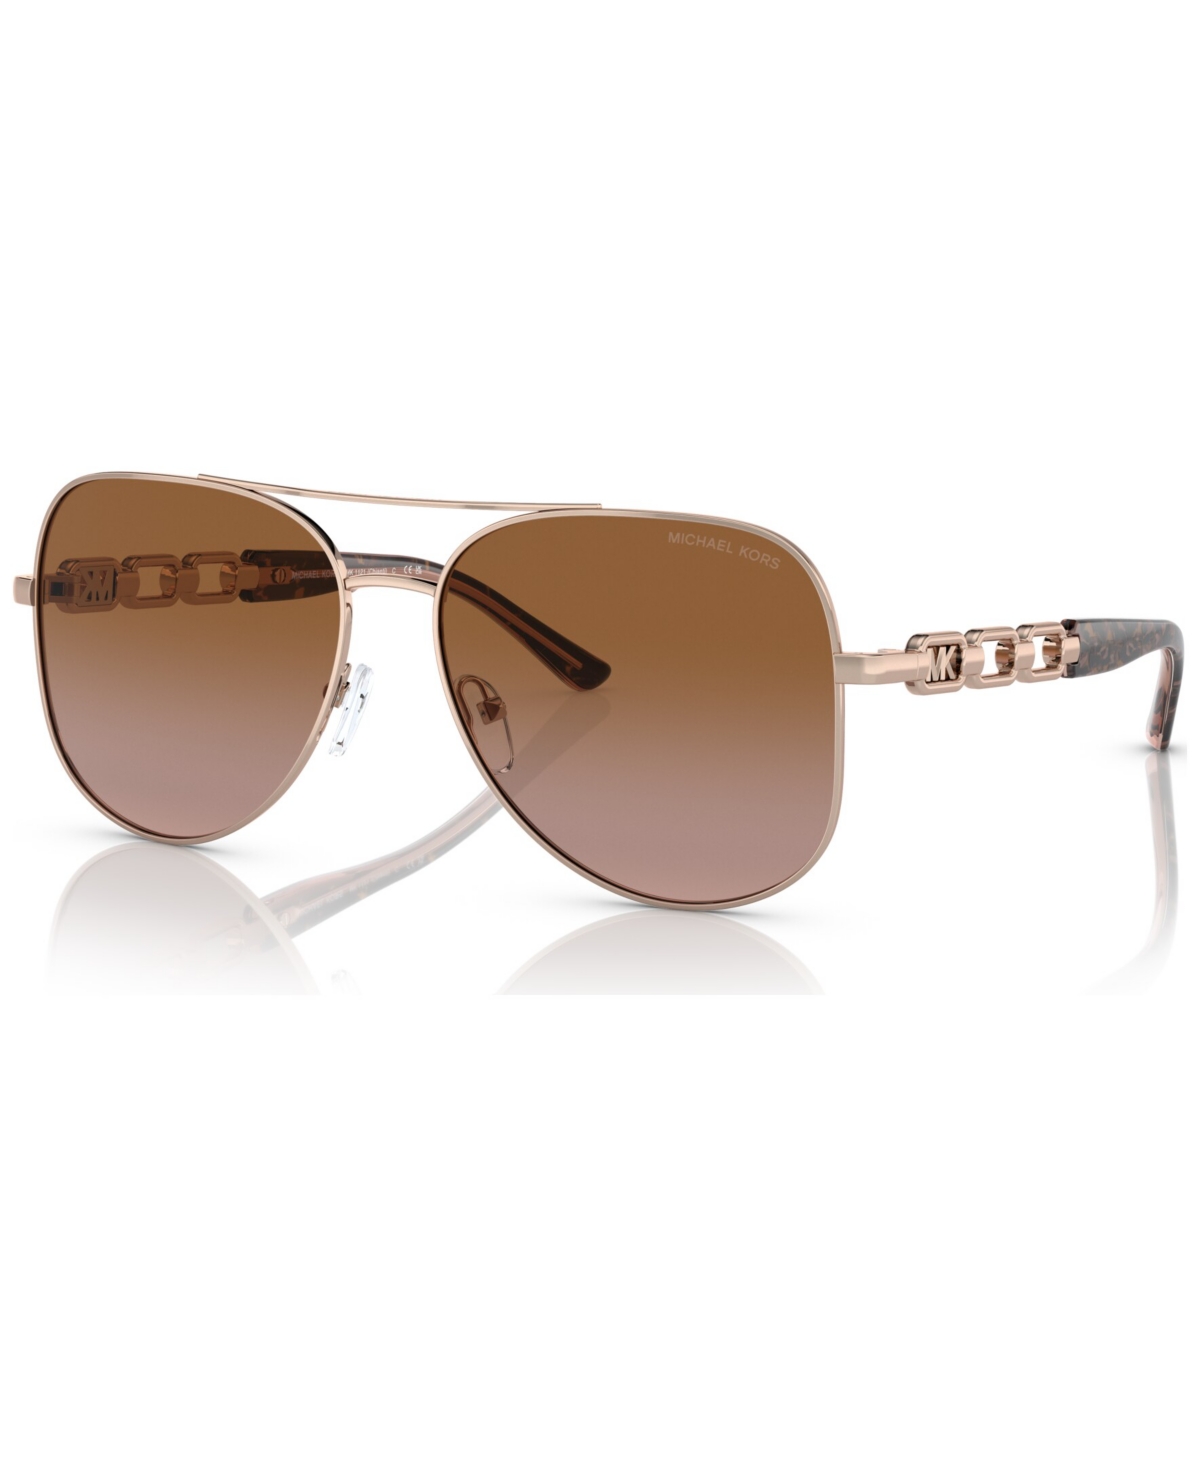 Michael Kors Women's Sunglasses, Mk1121 In Rose Gold-tone